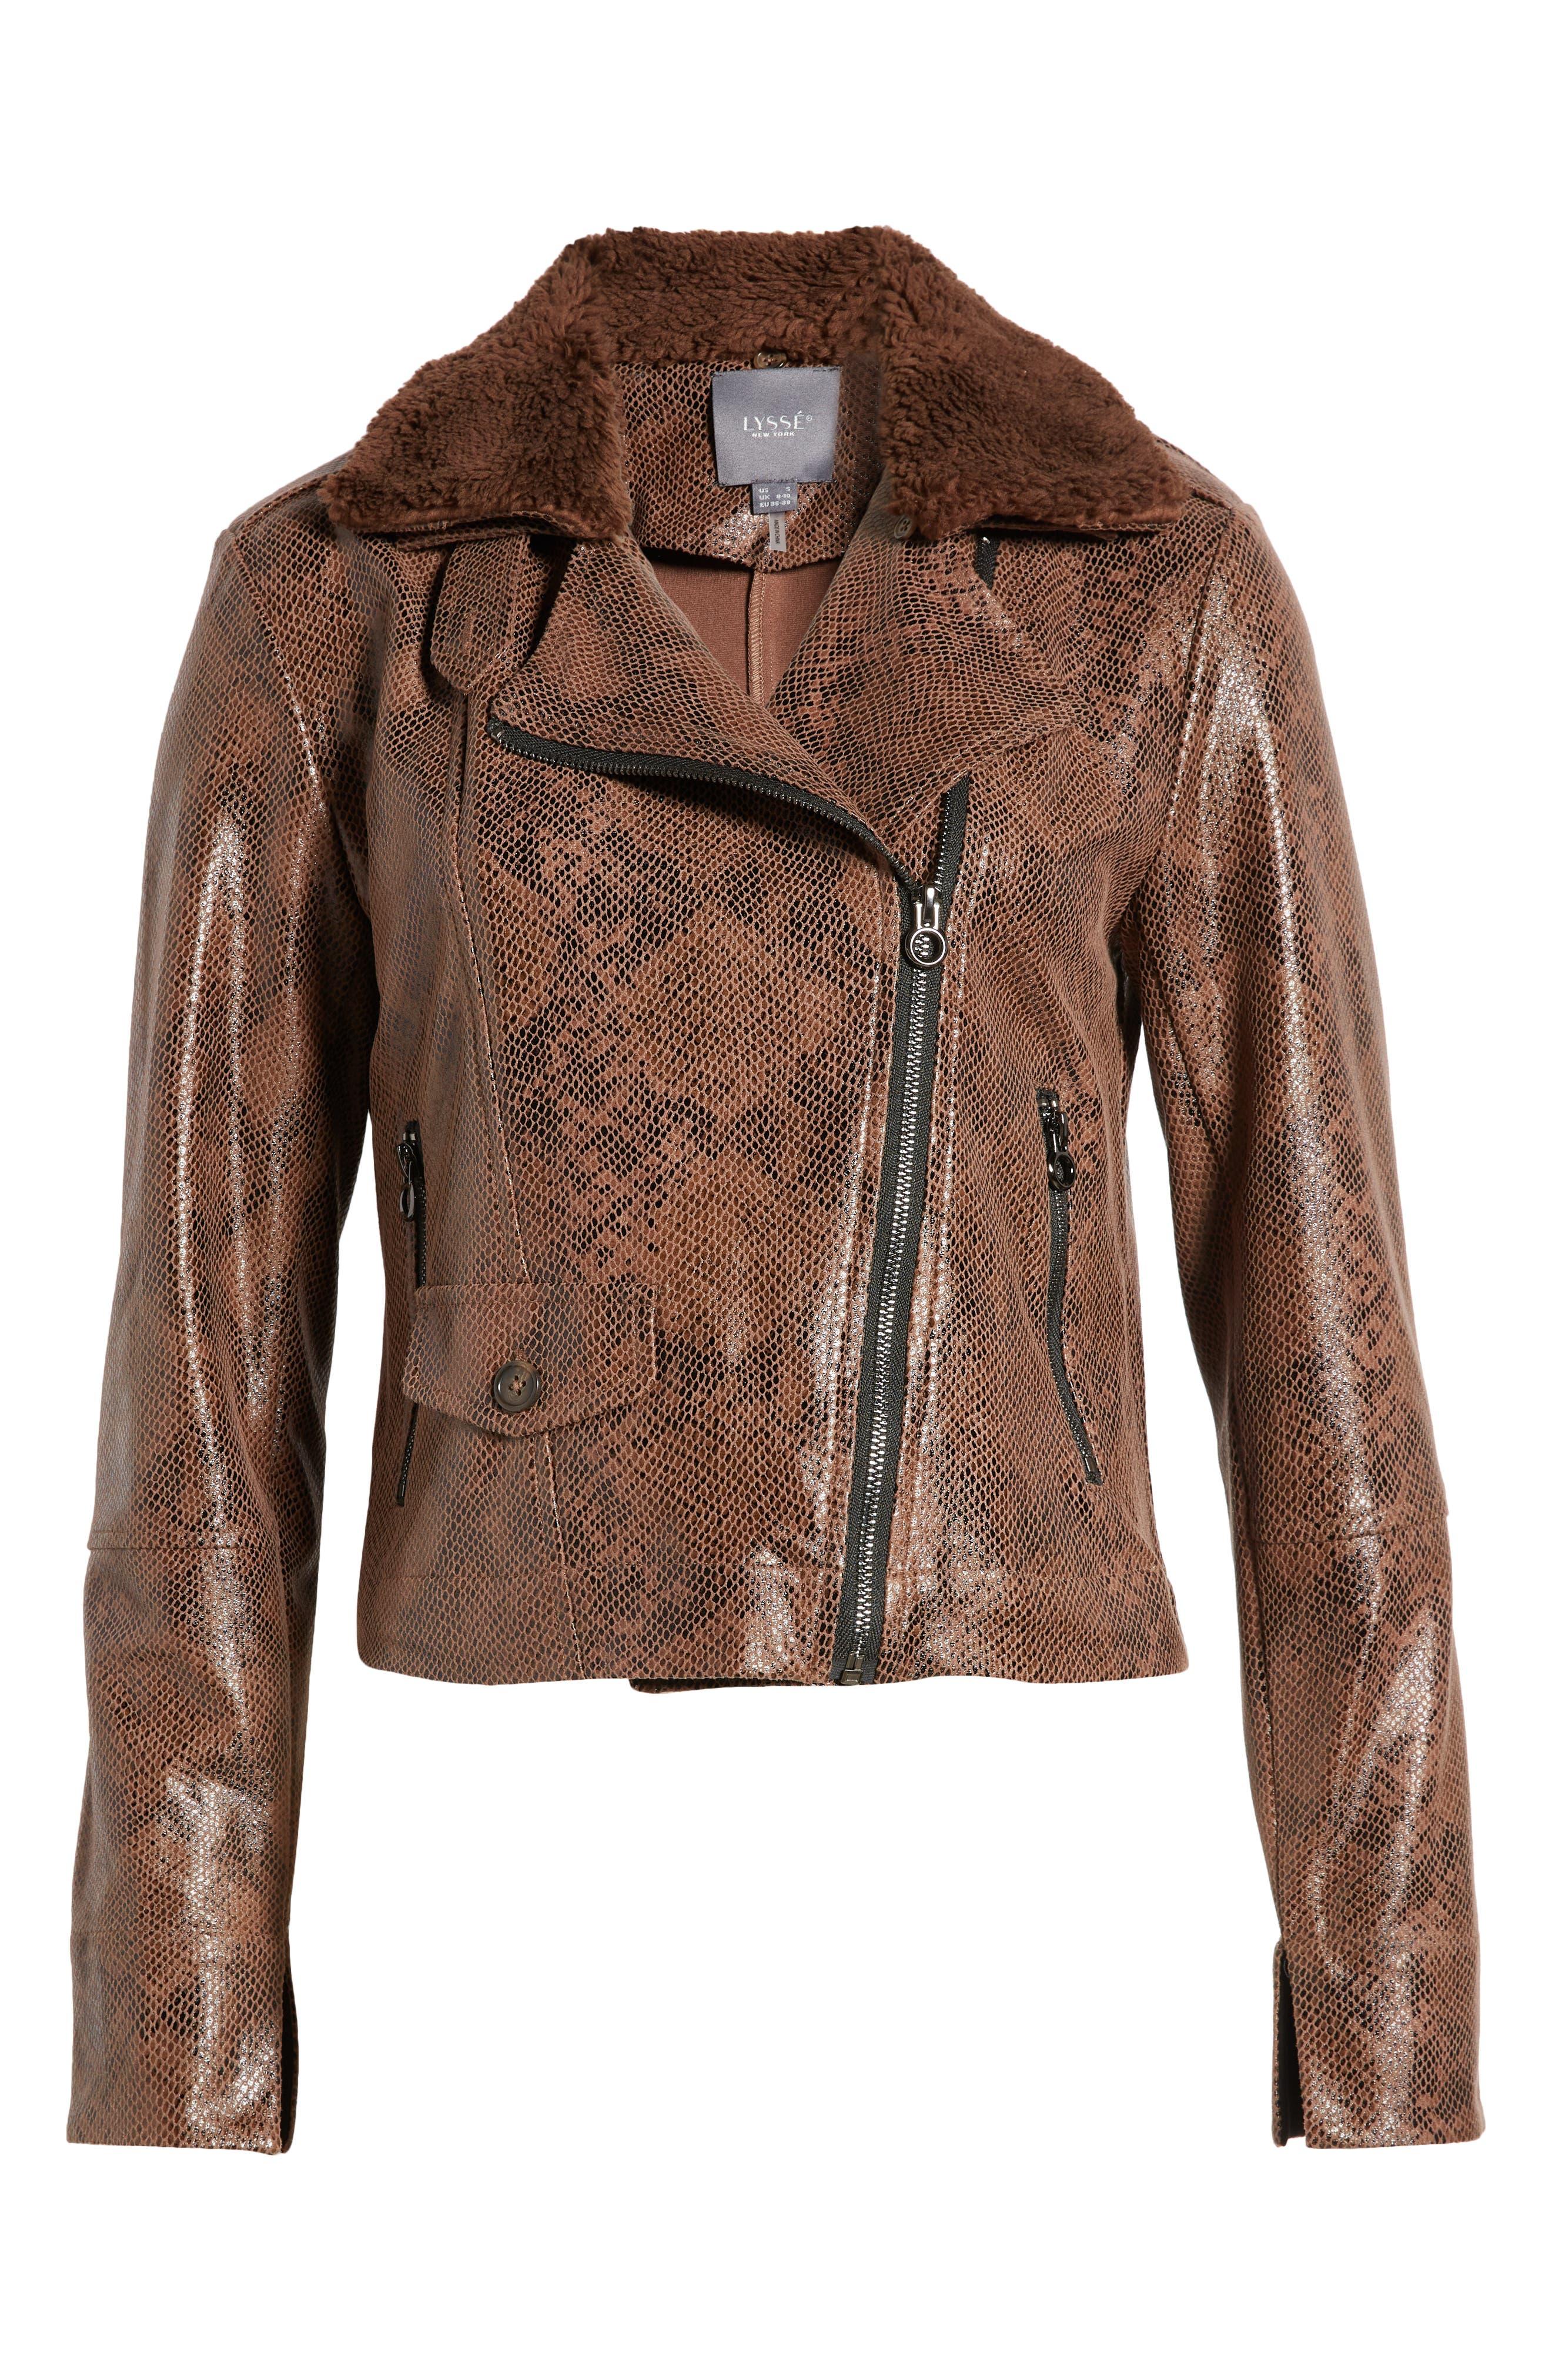 Quilted Leather Jacket for Men, Natural Snakeskin Motorcycle Jacket